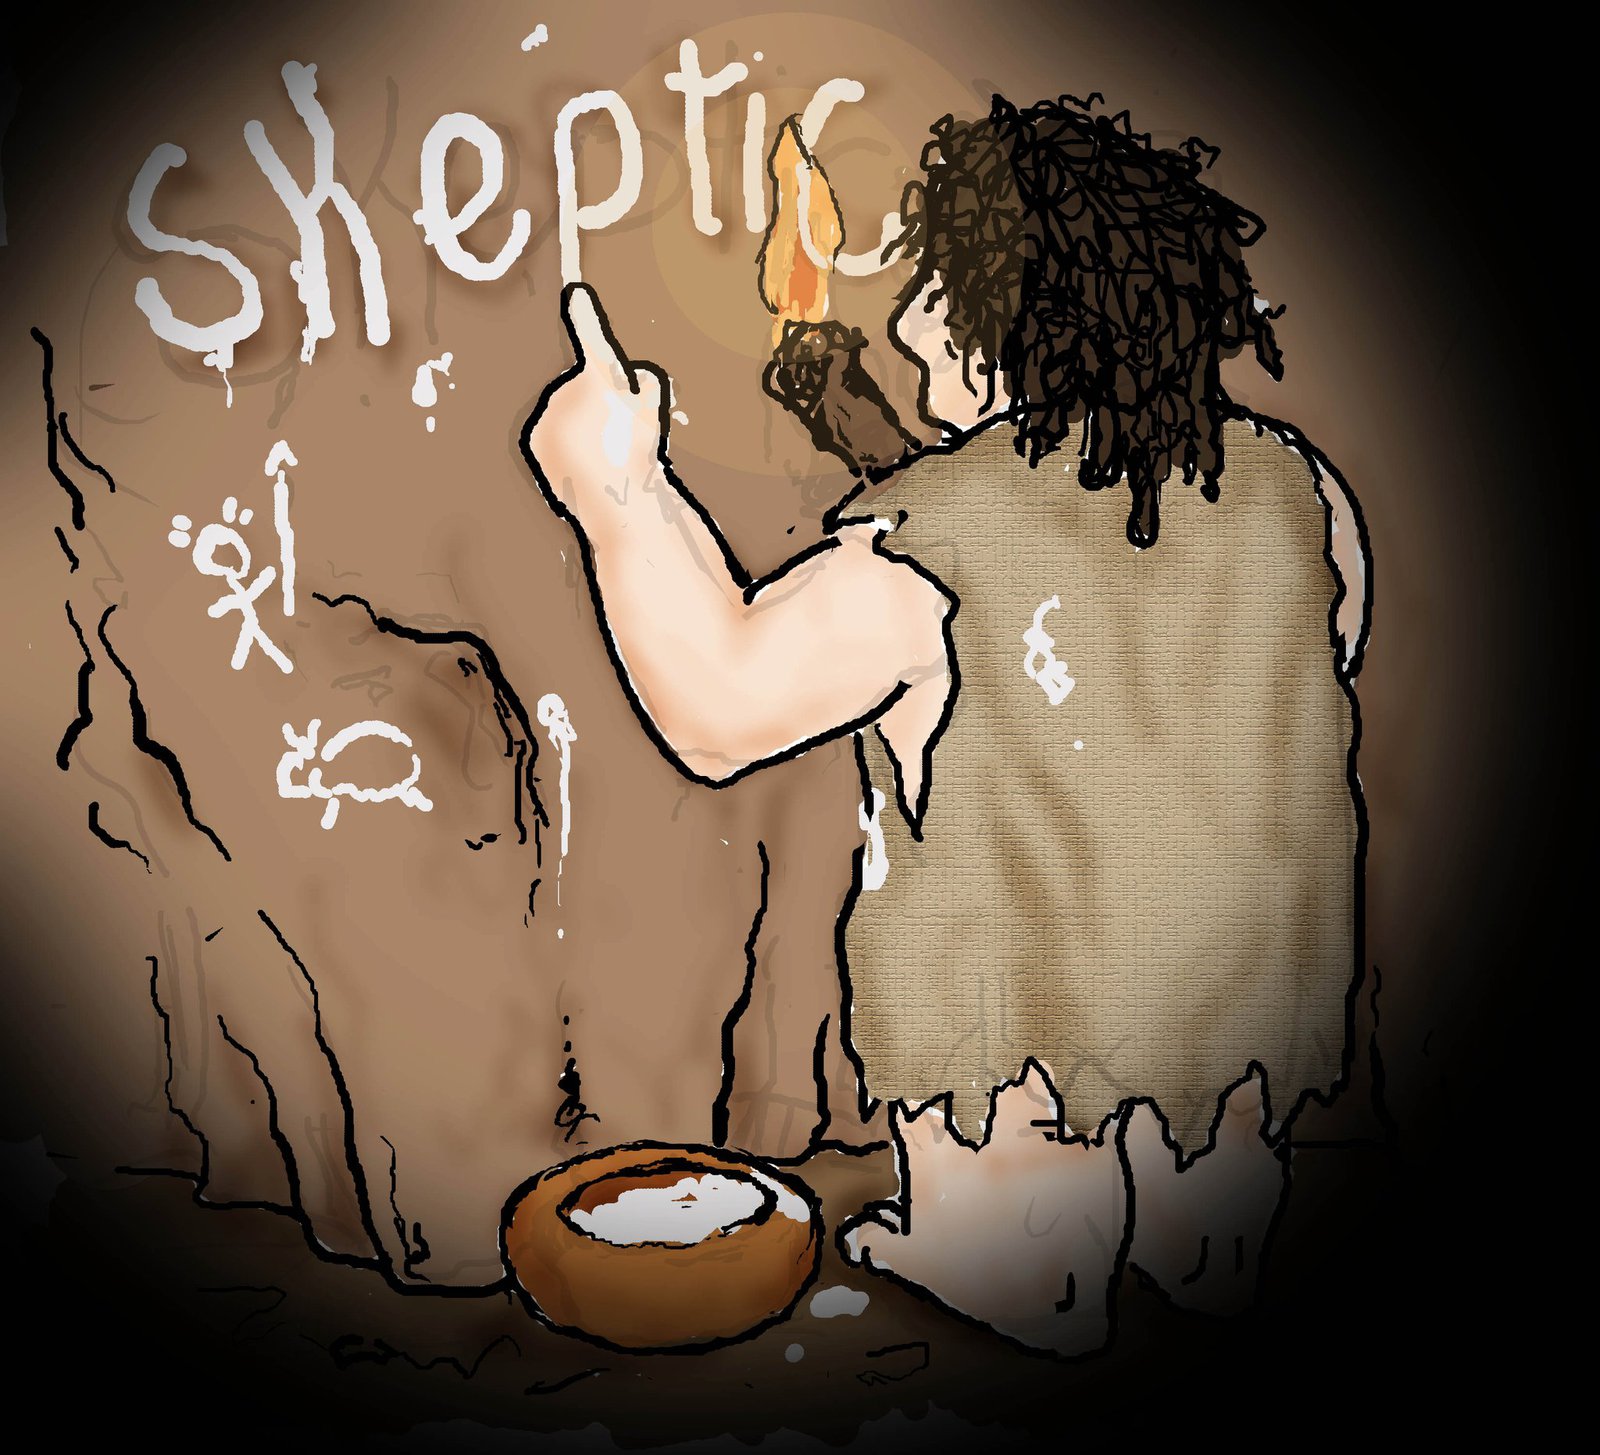 Skeptic Cave Art